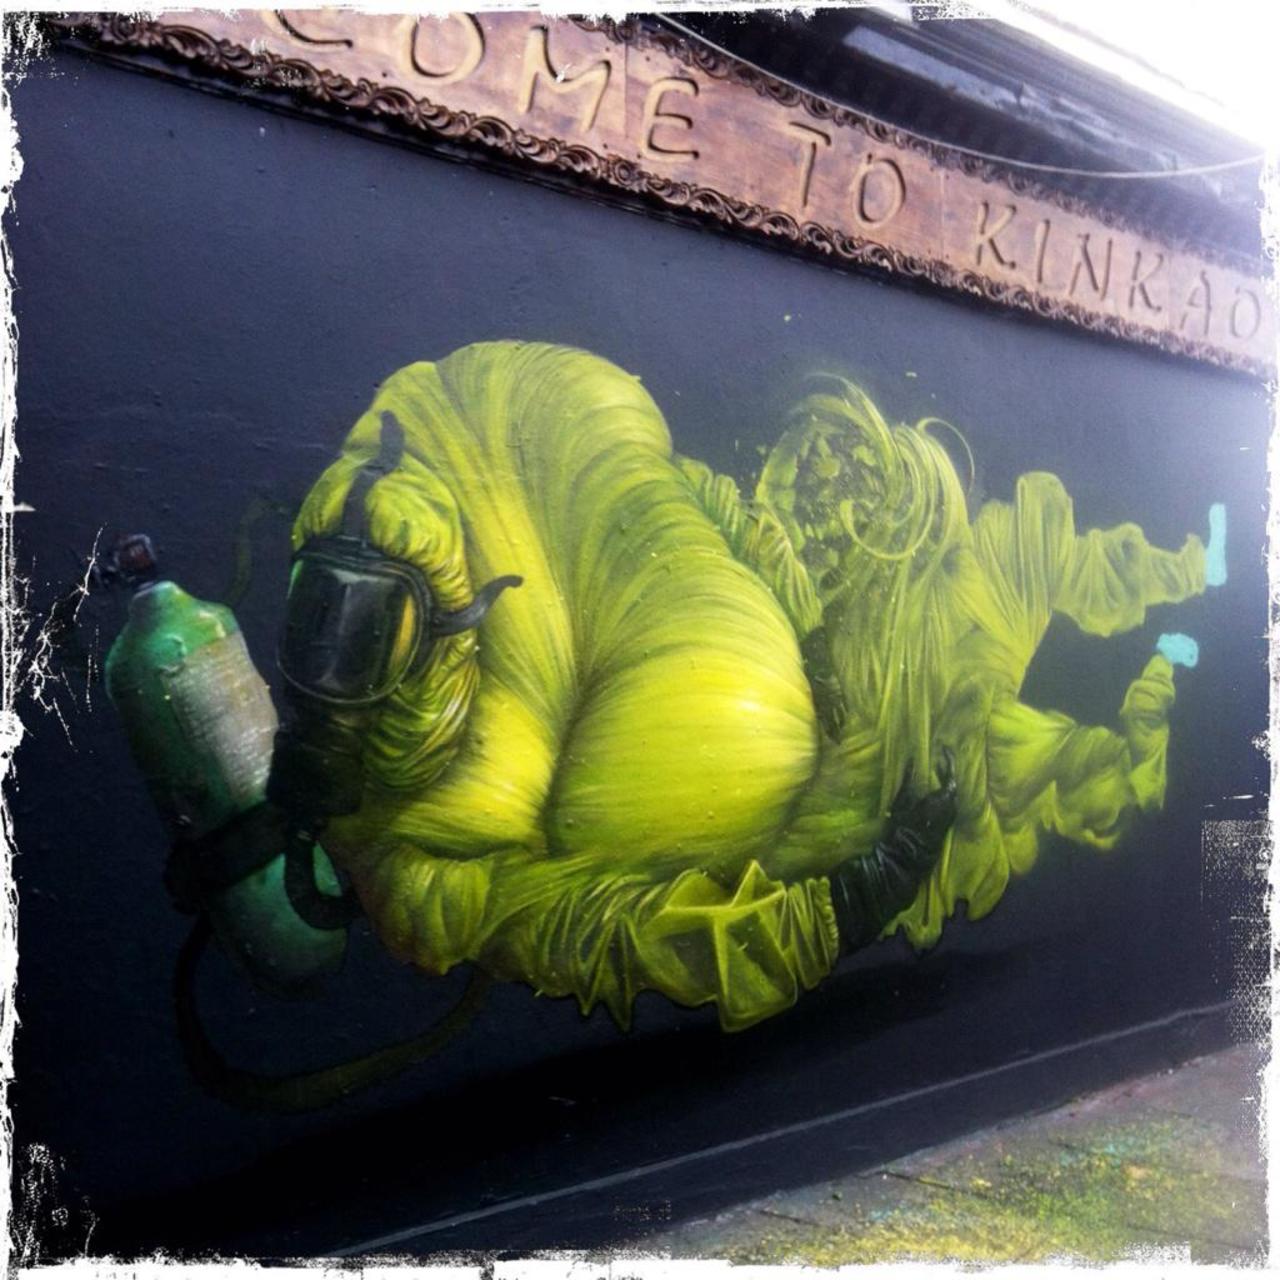 Great new work on Pedley Street by Bom.K 

#streetart #art #graffiti http://t.co/DUdaCaxtUf